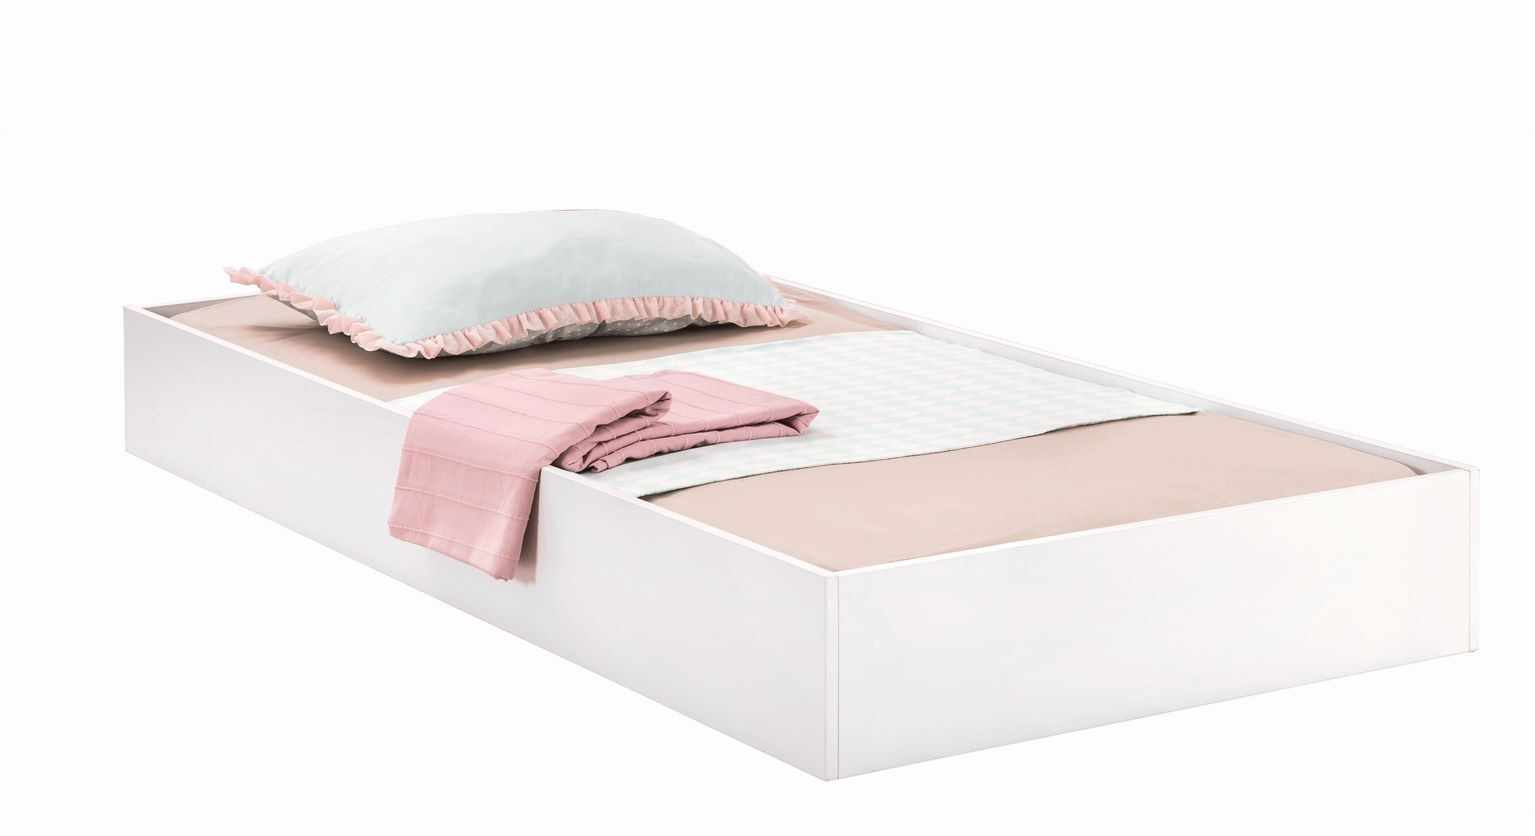 Sertar pat din pal, pentru tineret Selena Pink Alb, l194xA93xH24 cm